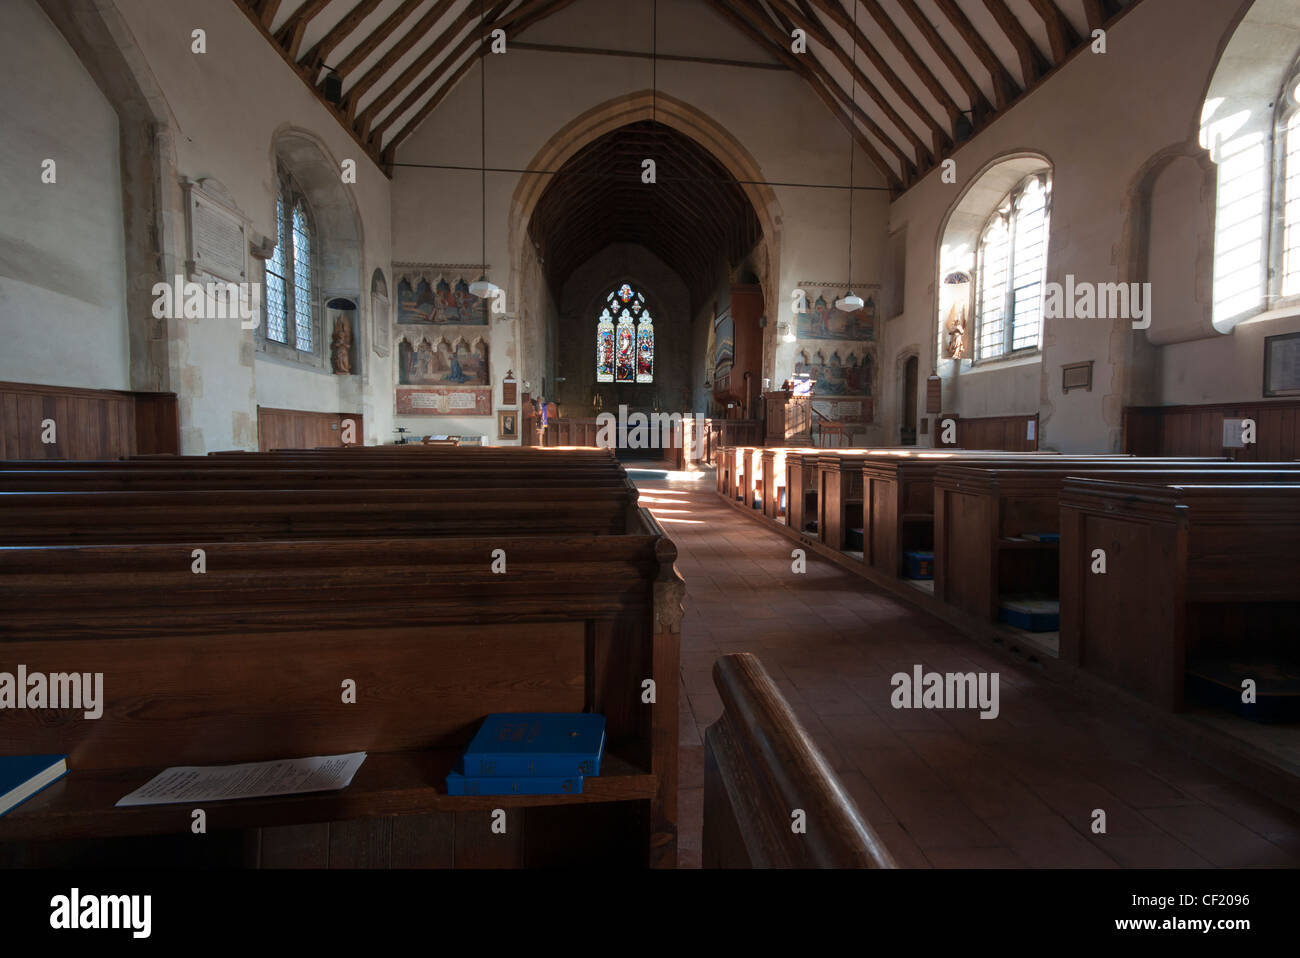 Inside Interior Of St Saint Michael The Archangel Parish Church Smarden Kent UK Village Churches Stock Photo